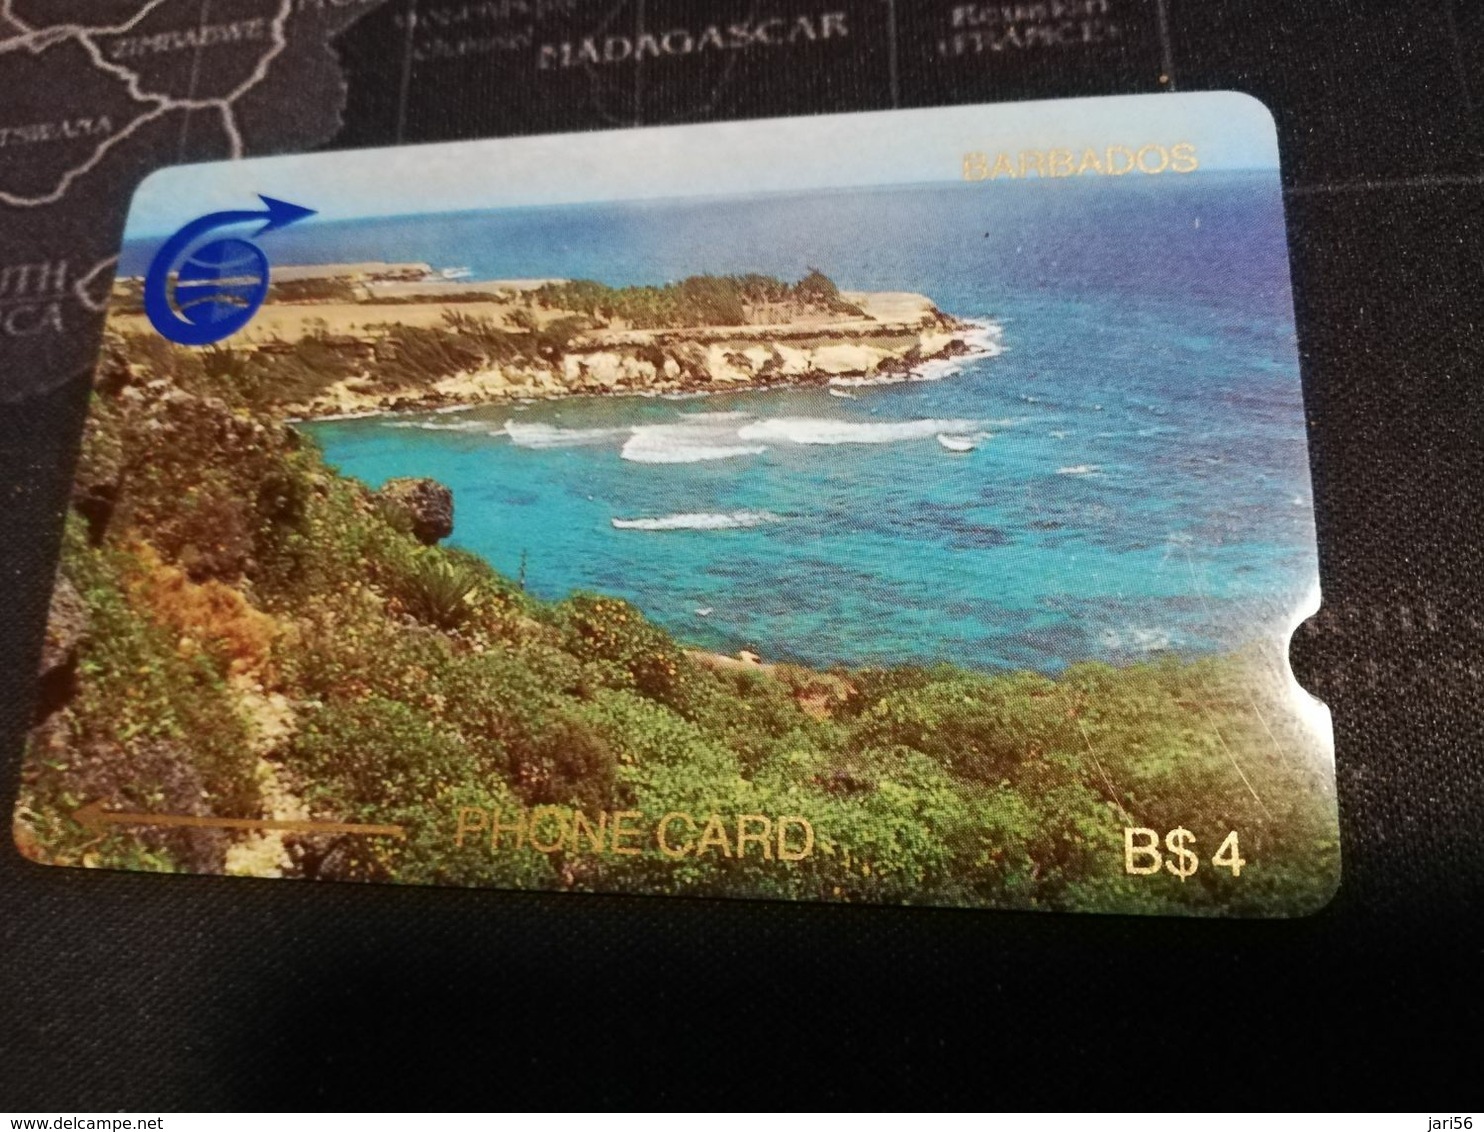 BARBADOS   $4- Gpt Magnetic     BAR-1A 1CBDA   COASTLINE   MINT  Card  ** 2856** RR - Barbades